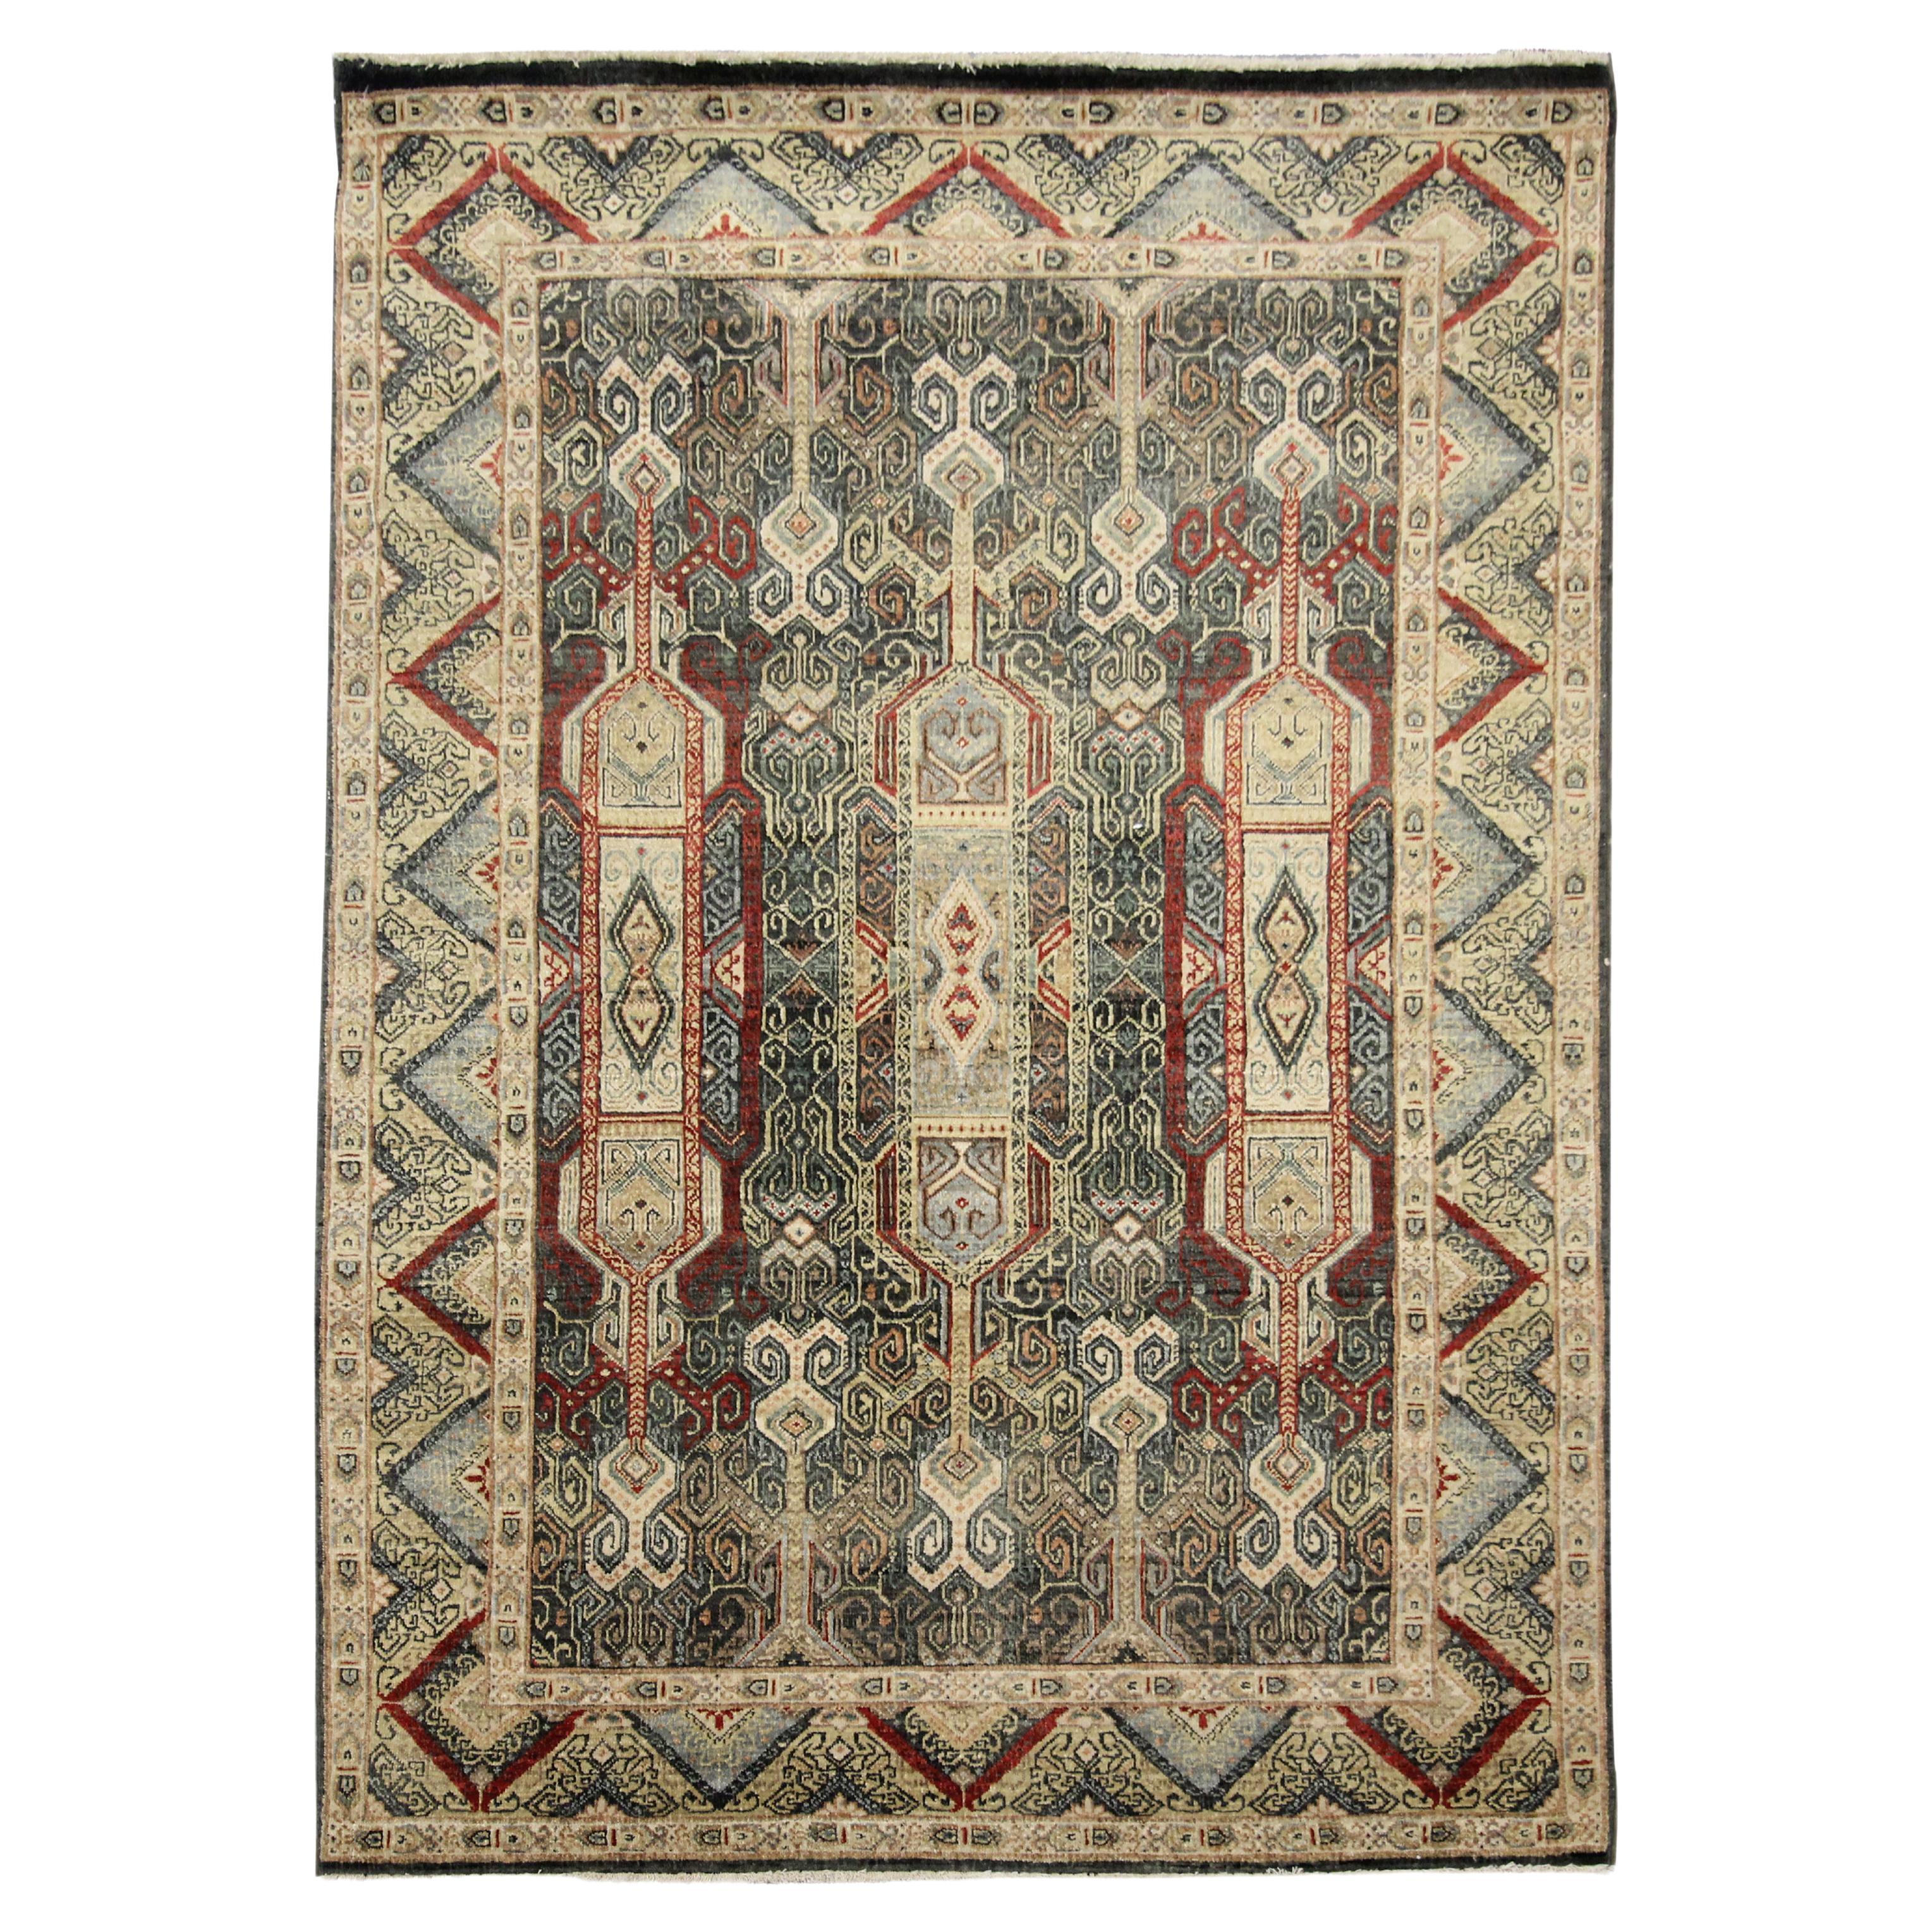 Handmade Carpet Traditional Indian Wool Area Rug Beige Green Geometric